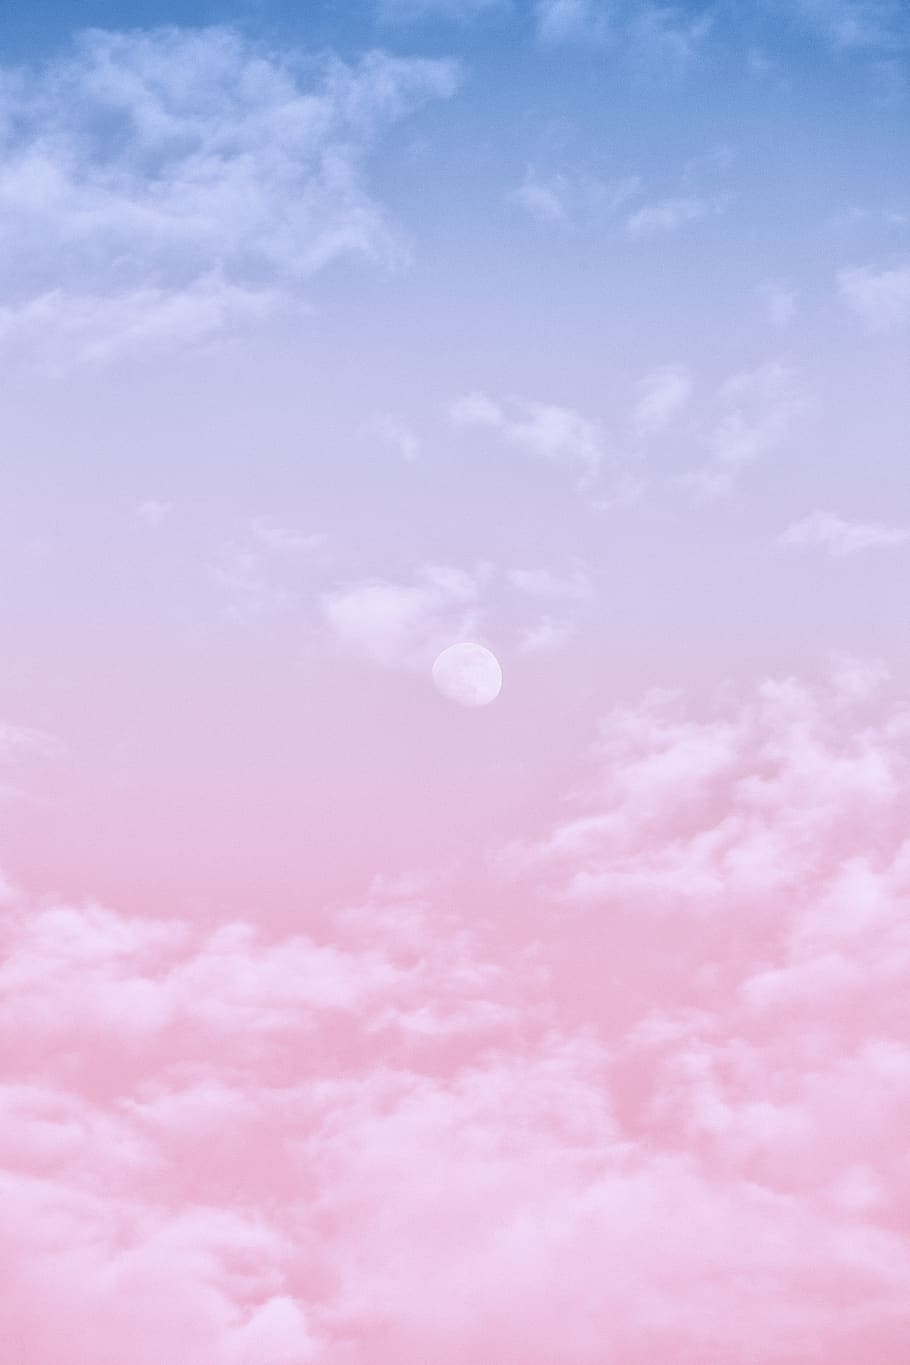 Pink Clouds Images  Free Download on Freepik